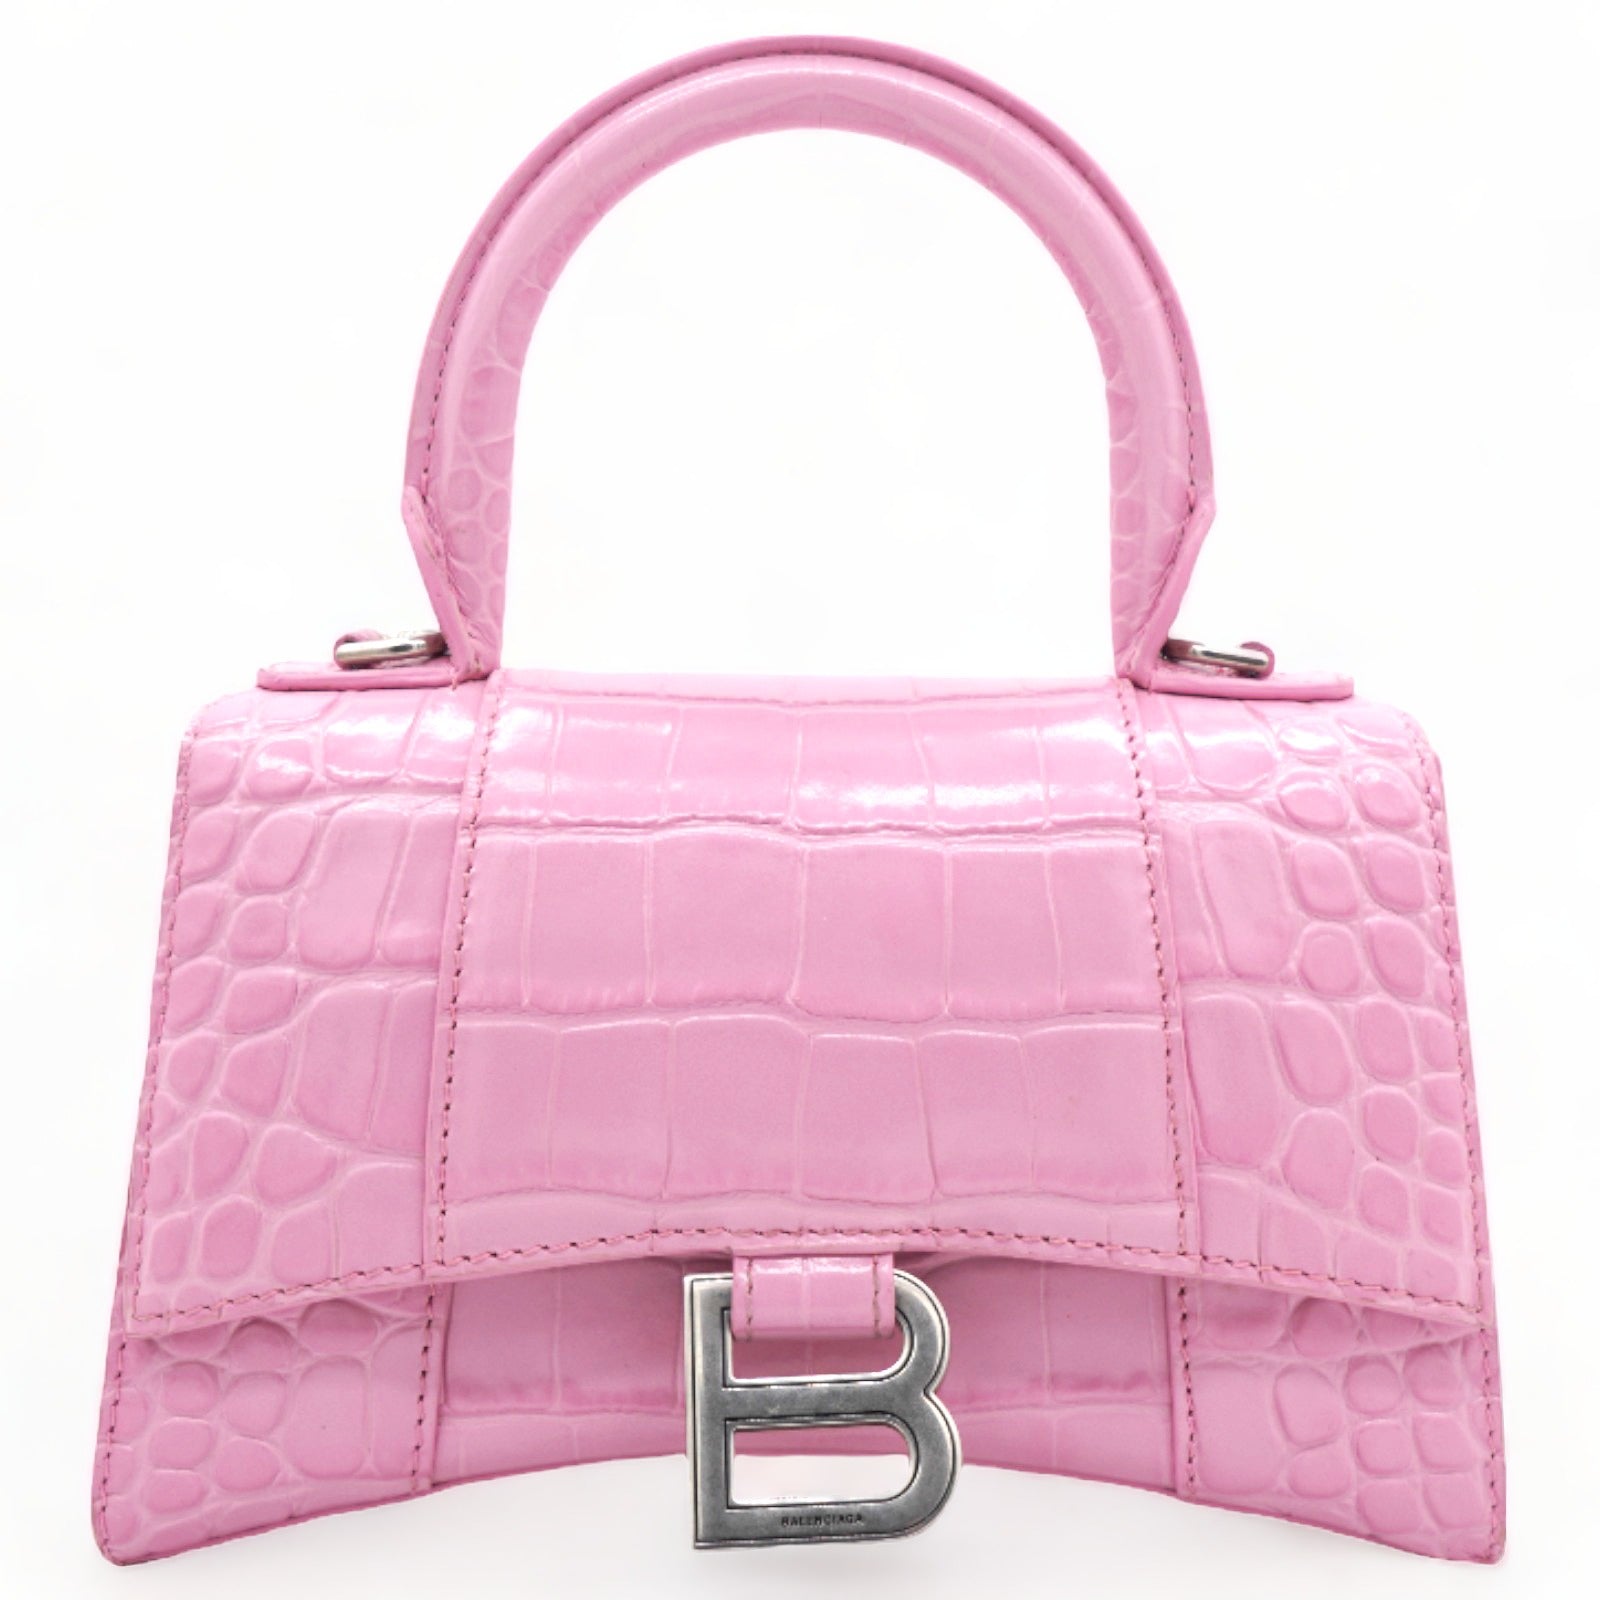 Shiny Calfskin Hourglass Top Handle Bag Mini Embossed Pink